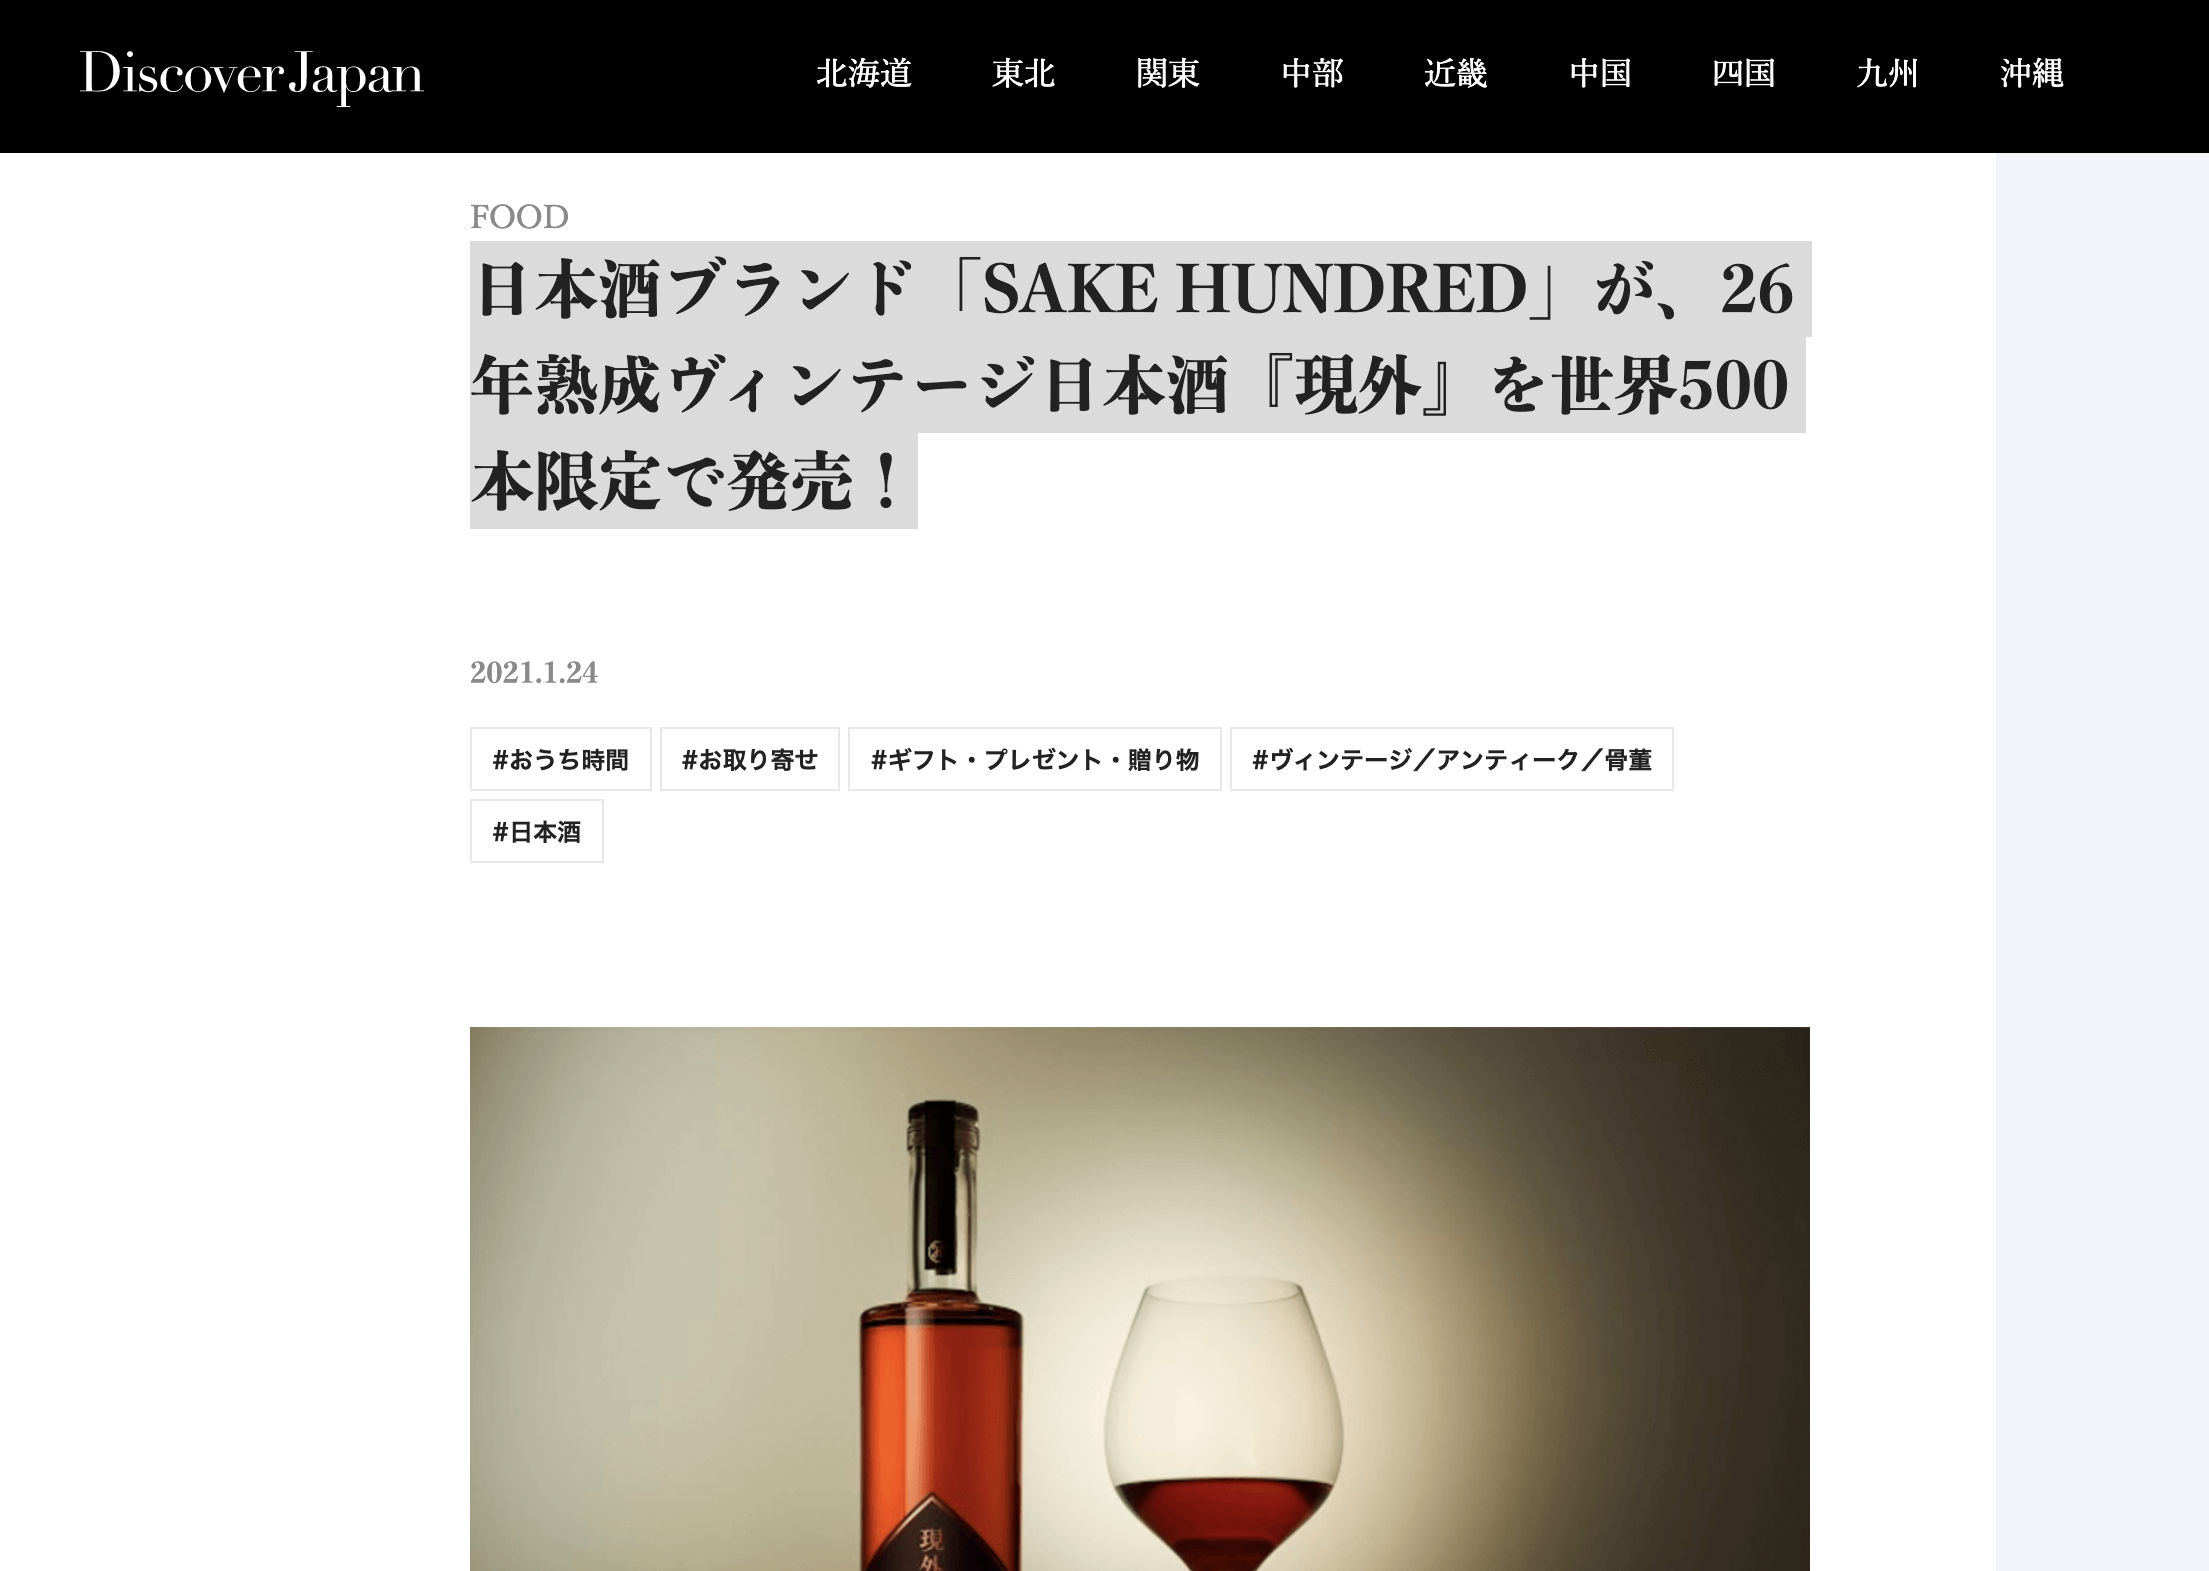 SAKE HUNDRED/現外】discoverjapanにて「日本酒ブランド「SAKE HUNDRED